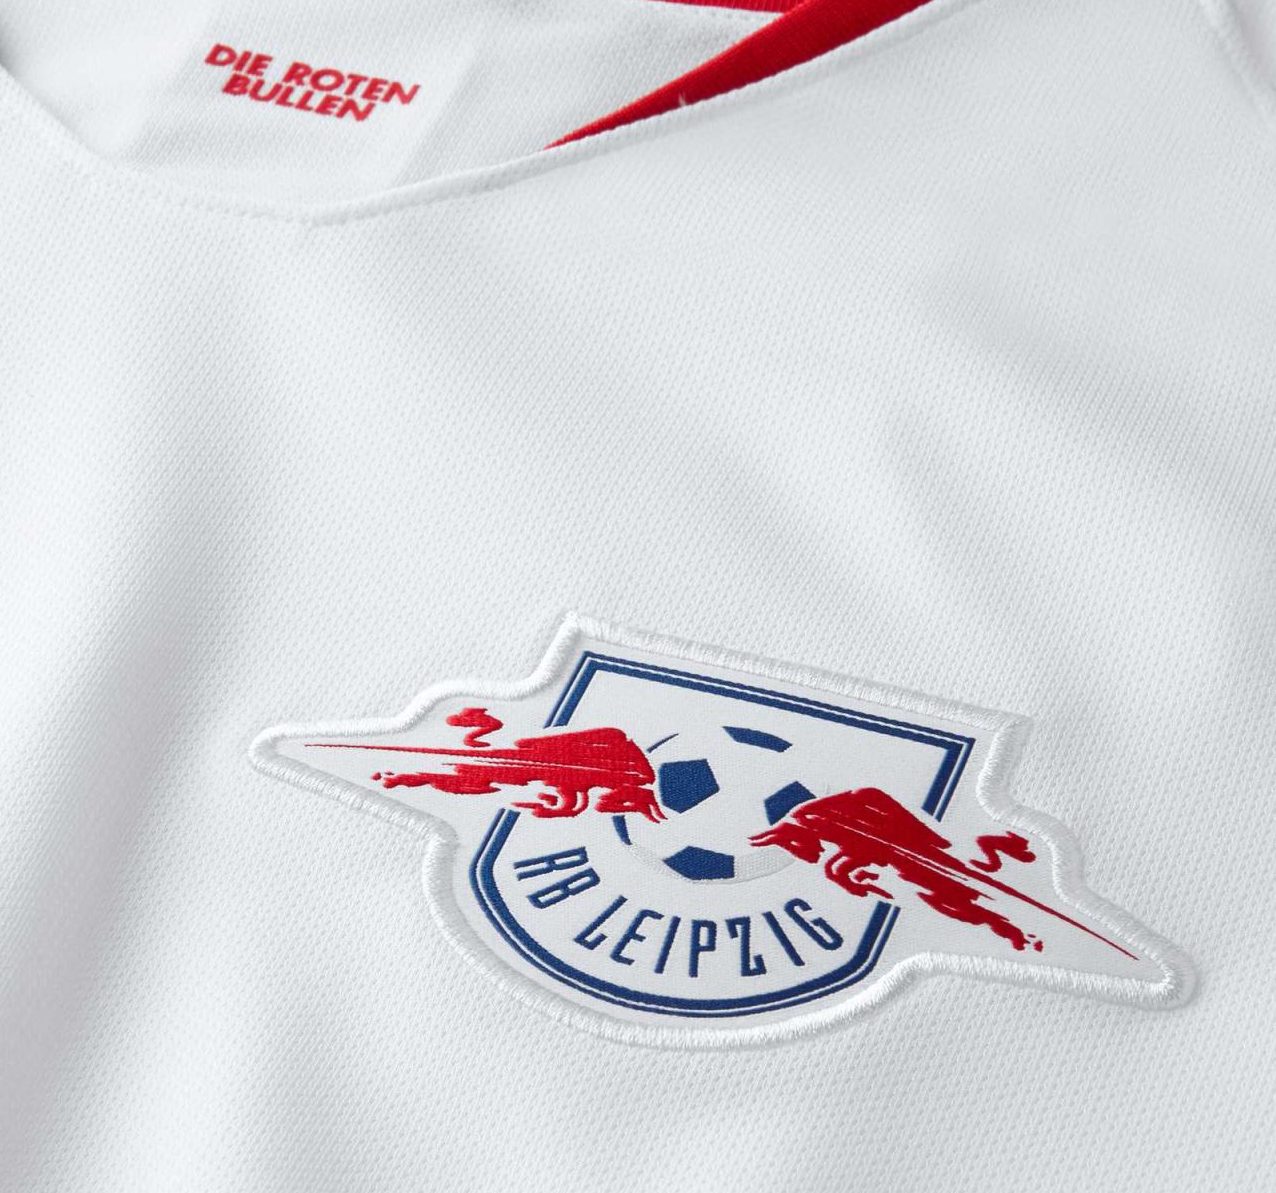 RB Leipzig 2018-19 Nike Home & Away Kits